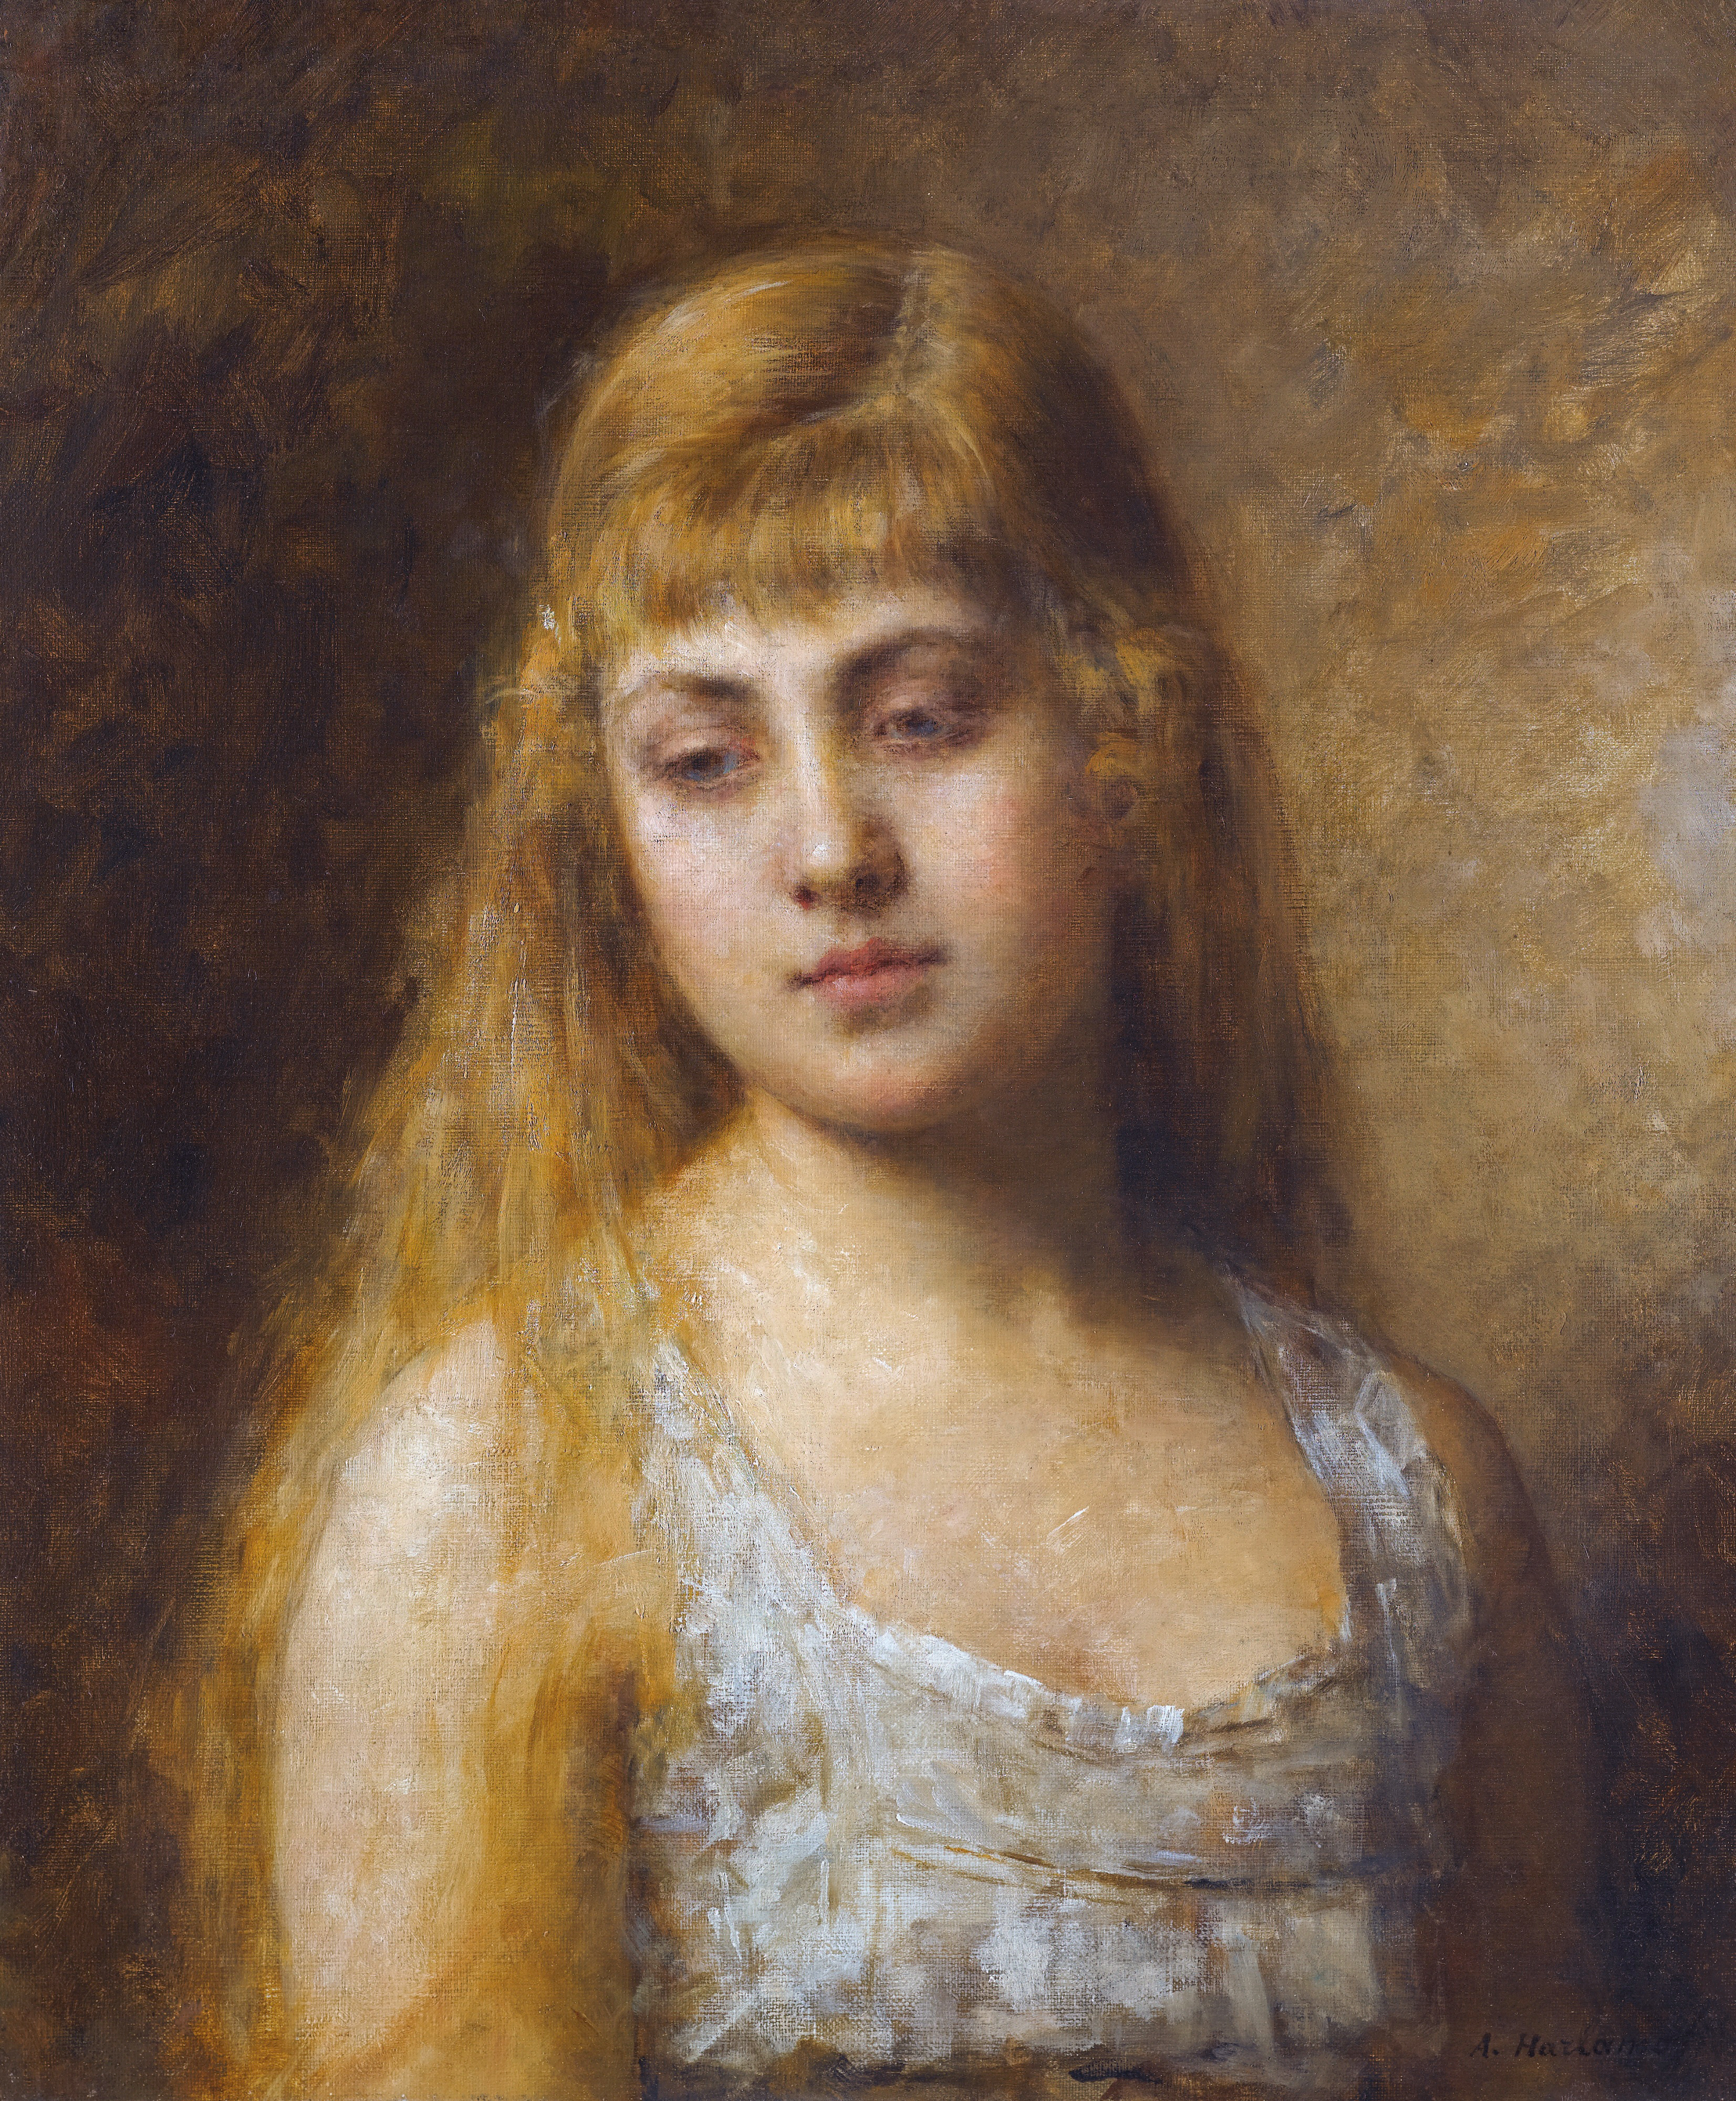 Felia Litvinne (1860-1936) by Alexei Alexeevich Harlamoff (1842-1925)